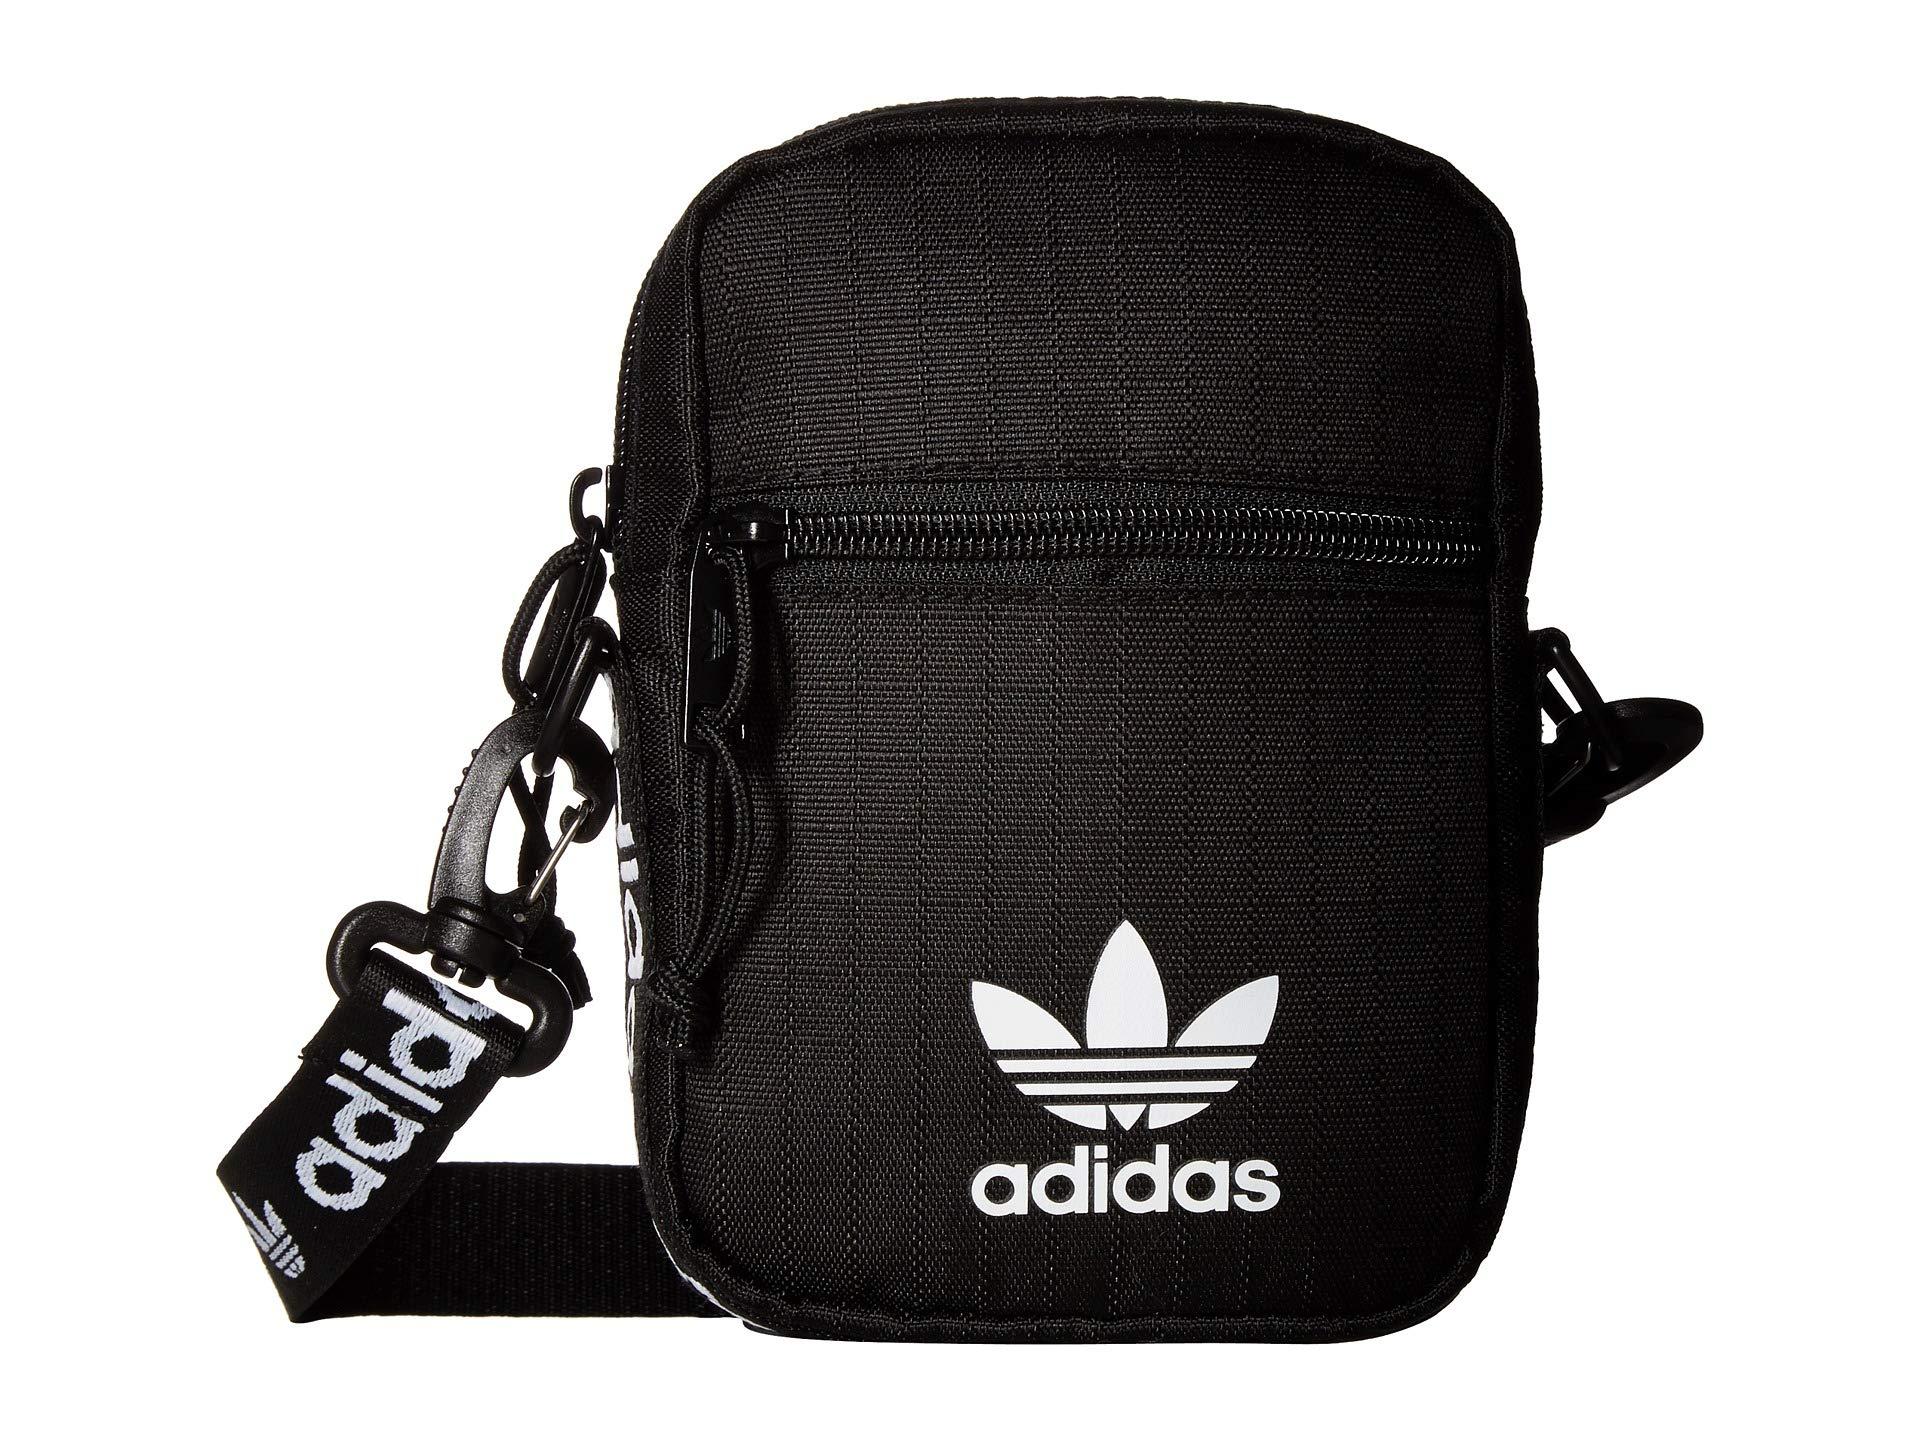 Lyst - adidas Originals Festival Bag Crossbody (black/white) Bags in Black